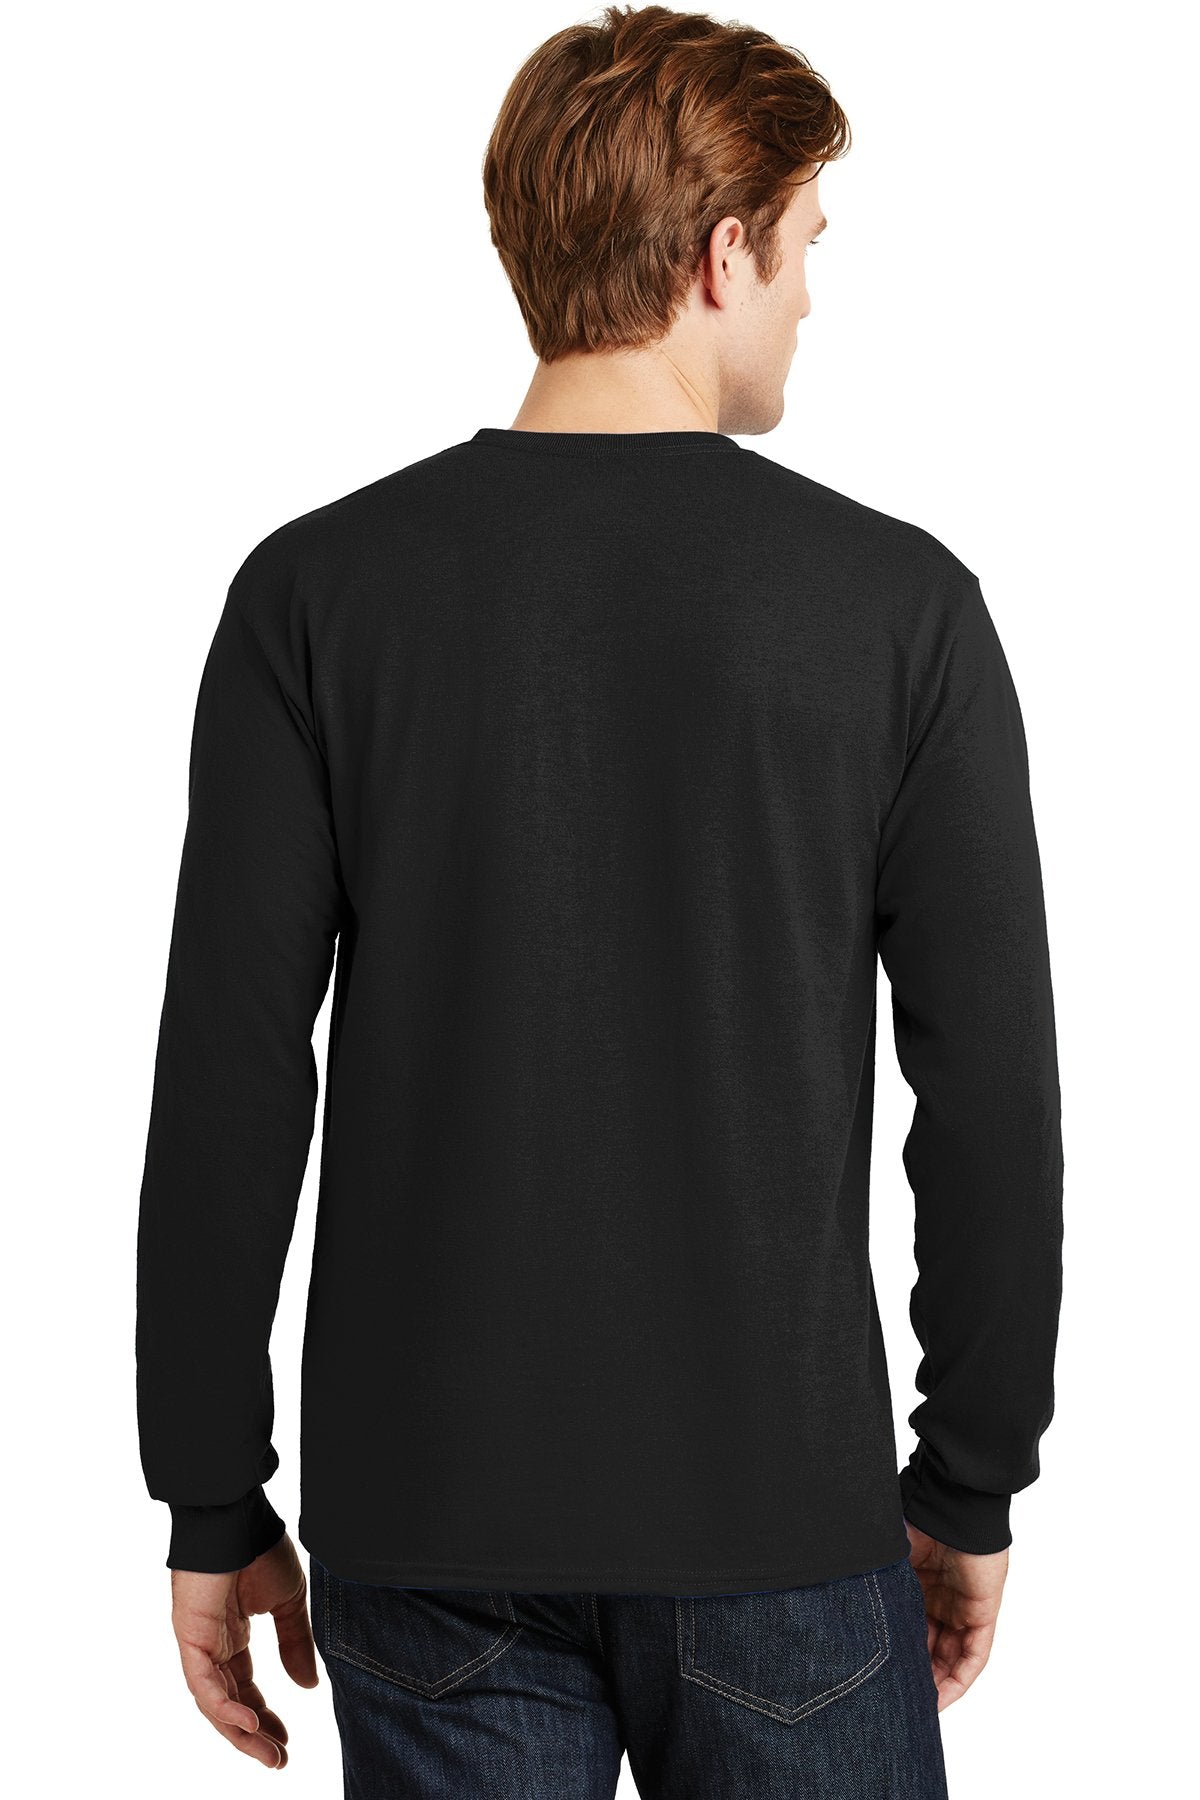 Gildan Dryblend Cotton Poly Long Sleeve T Shirt in Black, add a custom ...